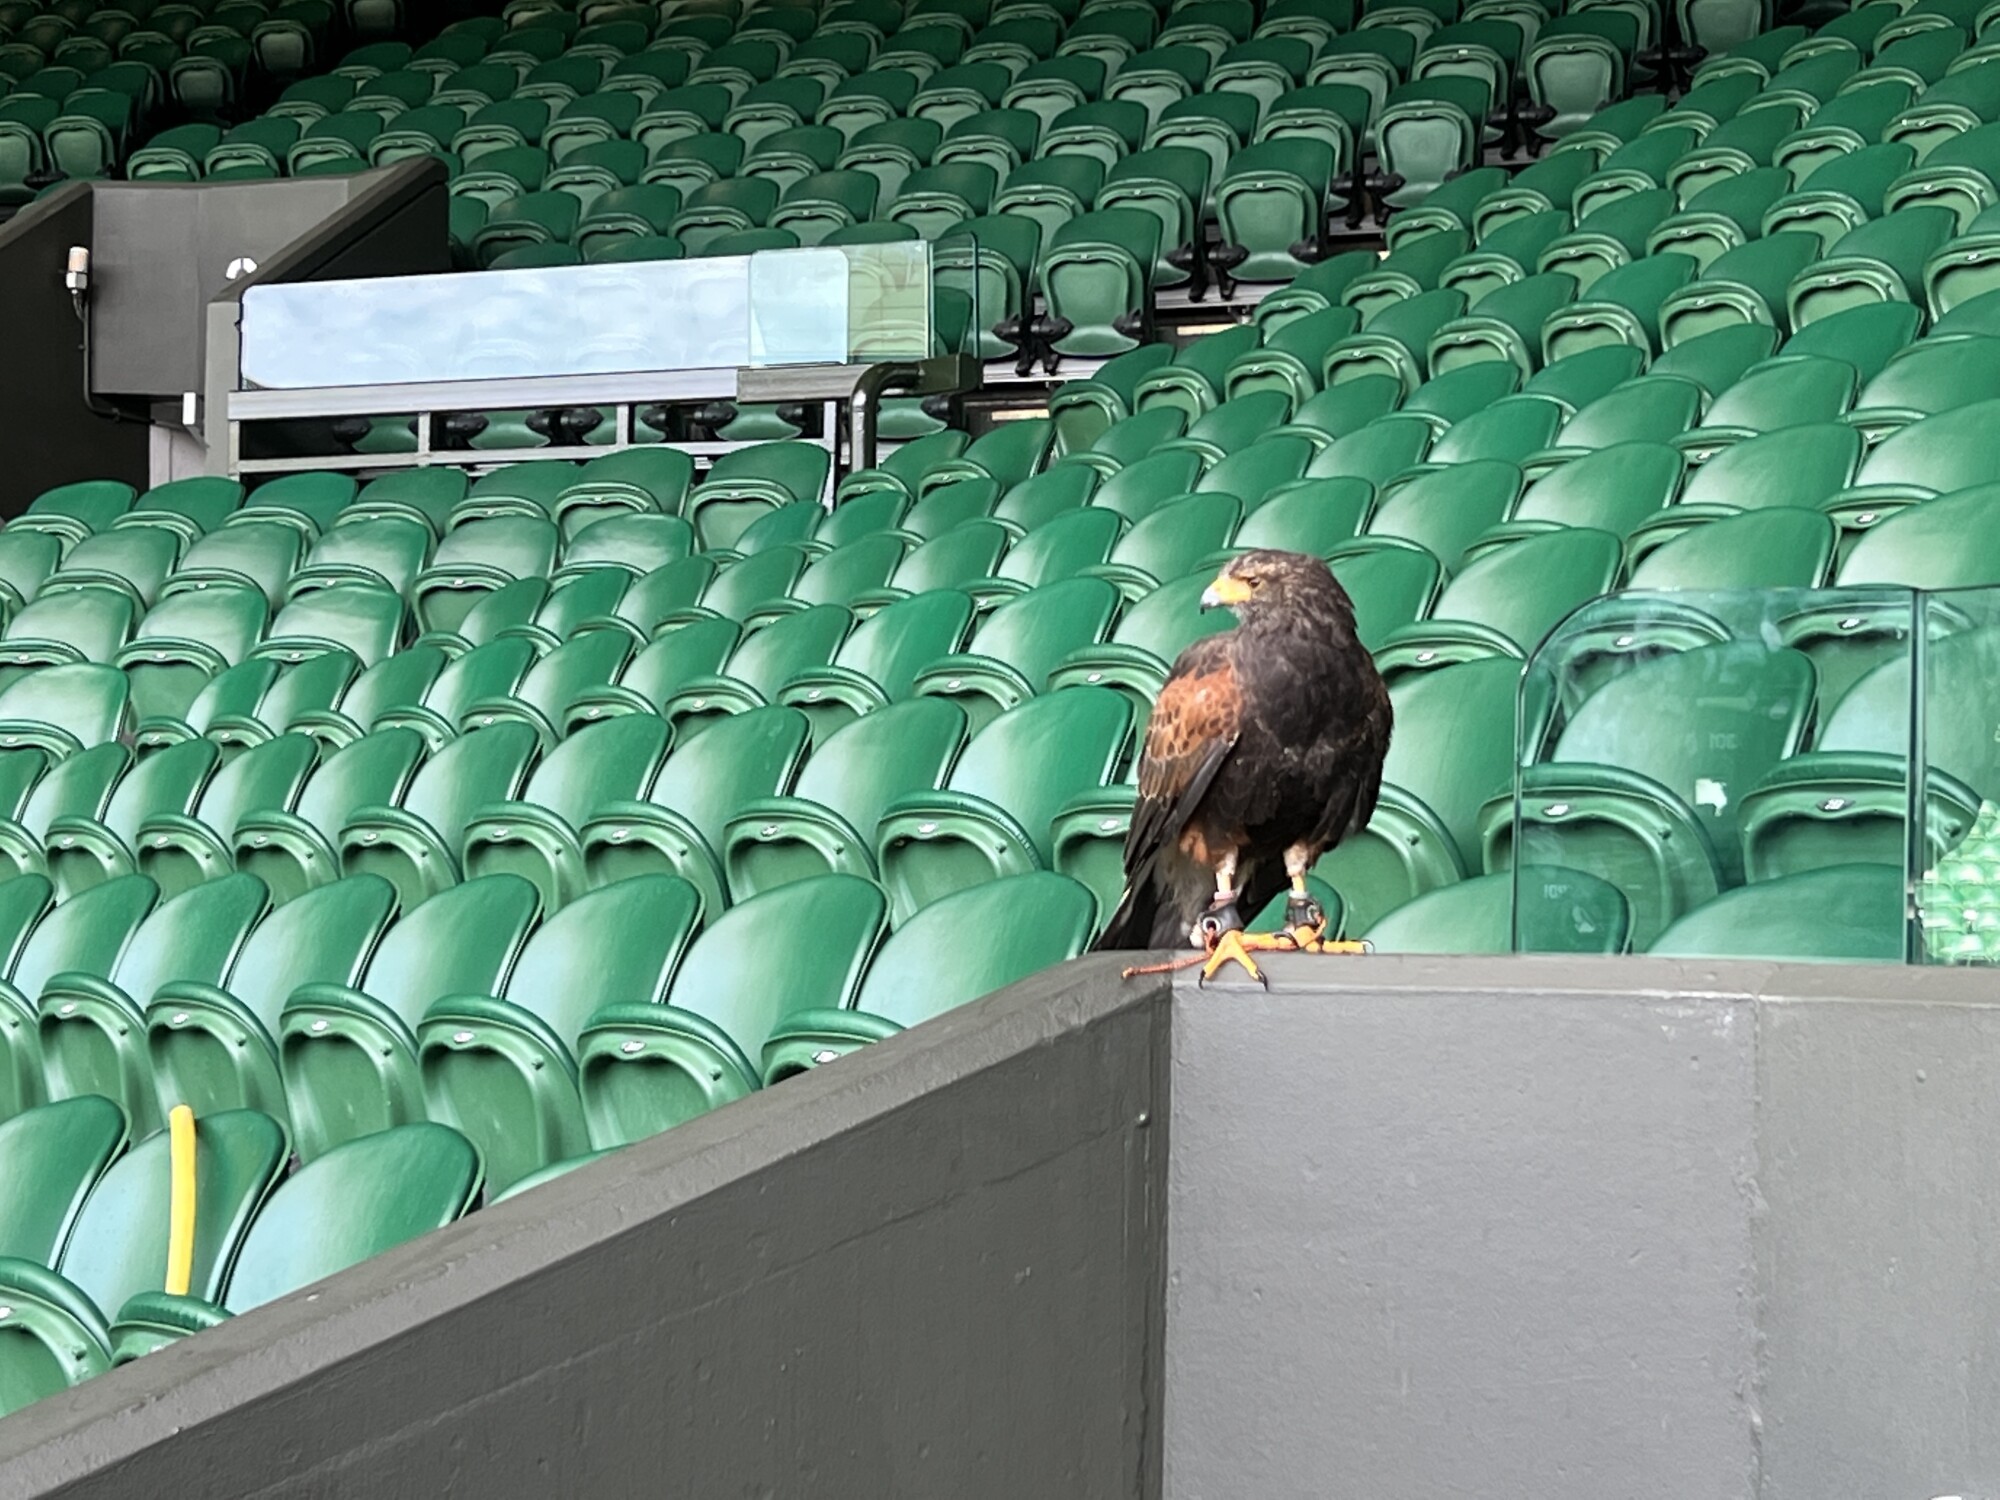 Rufus, Harris's hawk who patrols Wimbledon, perches near the seats.